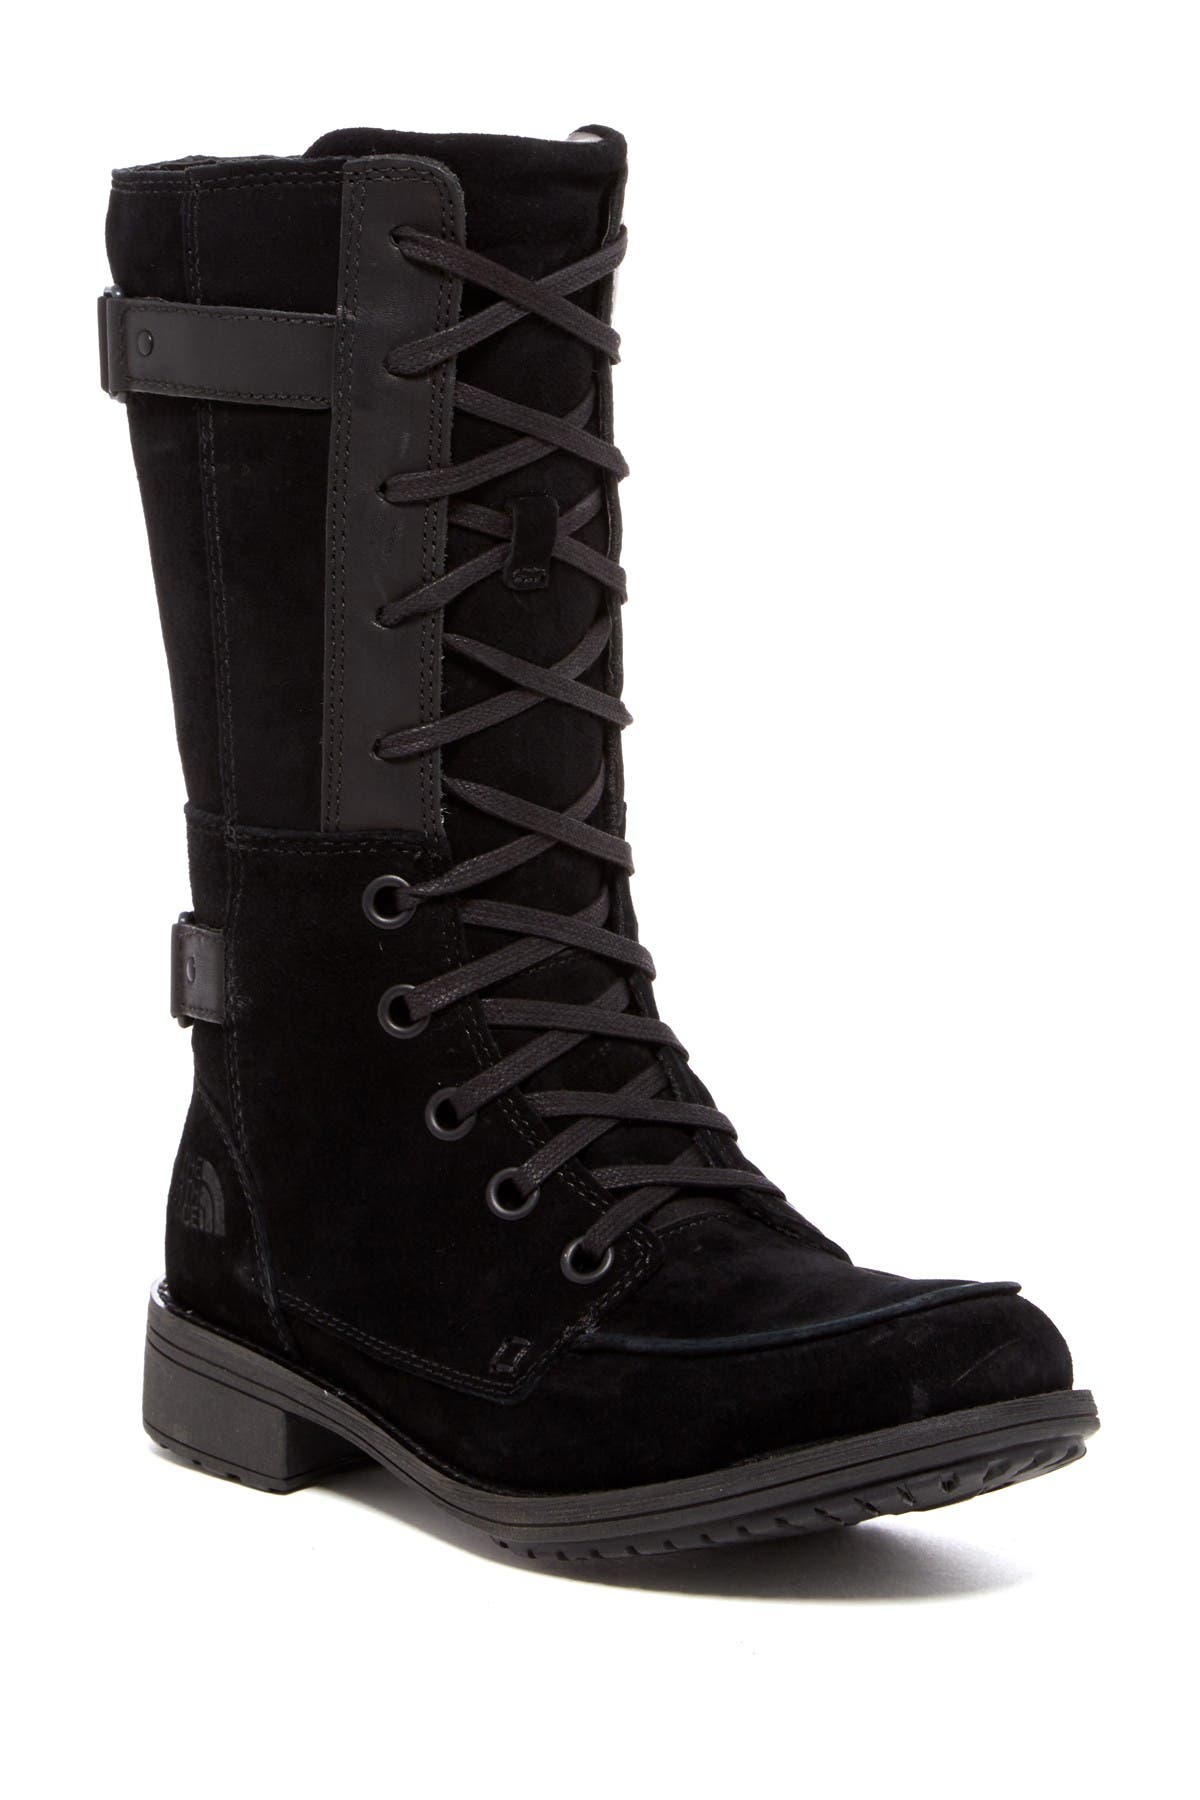 men's bridgeton smooth toe winter boots